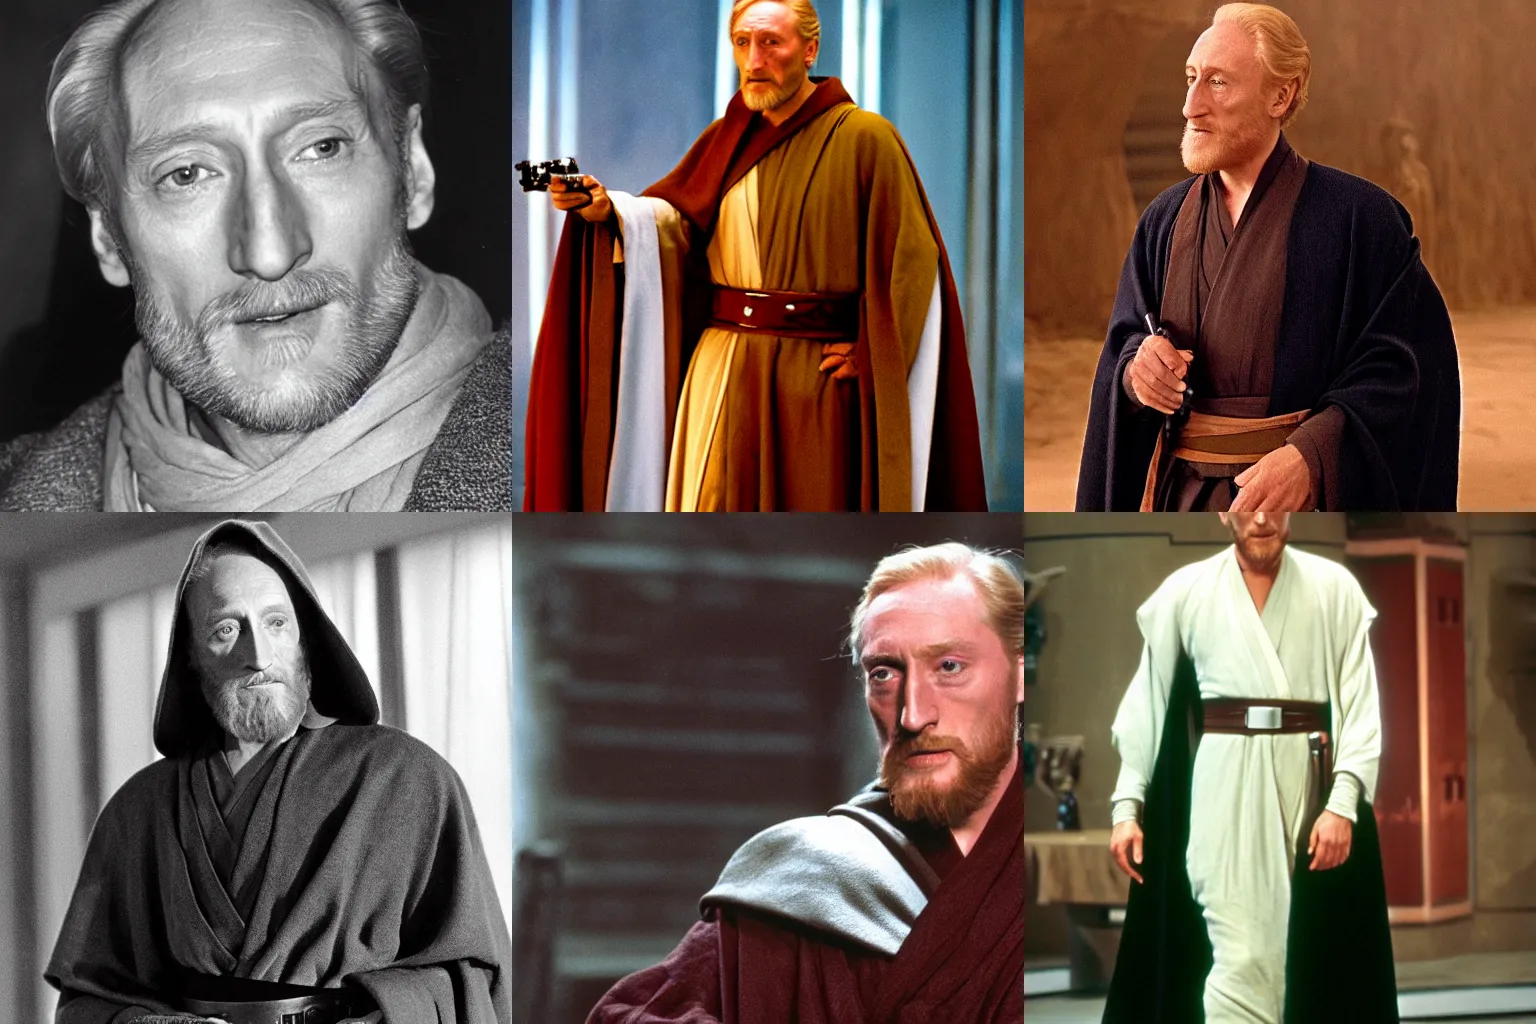 Prompt: Charles Dance as Obi-Wan Kenobi in the film Star Wars